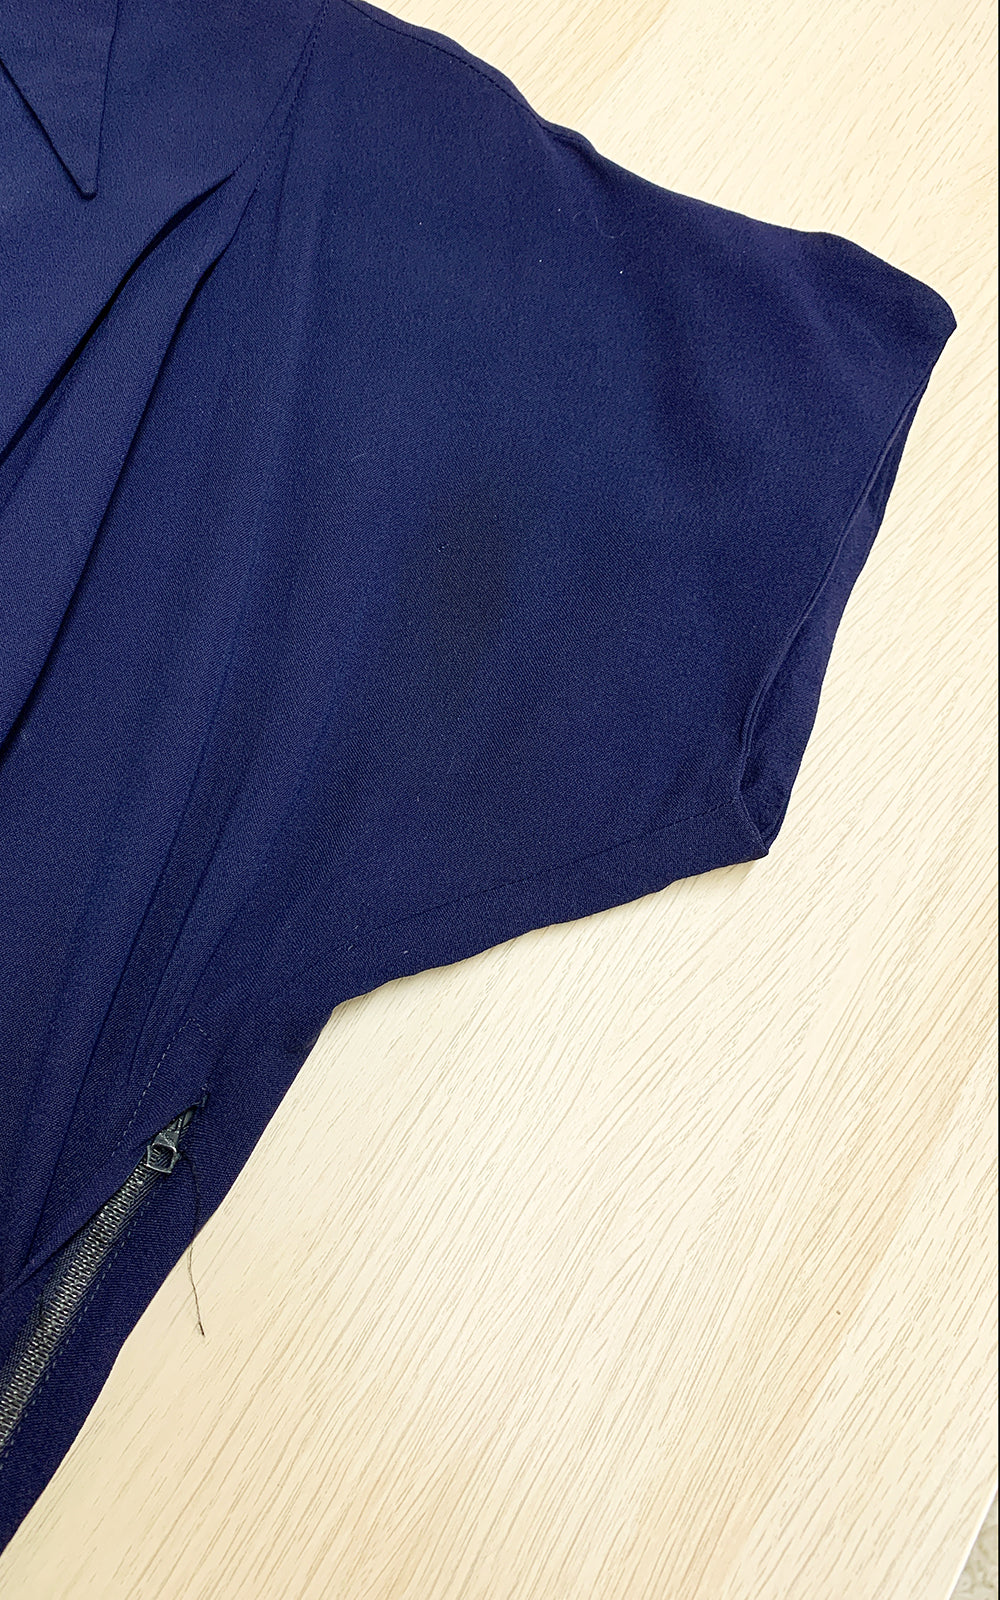 1940s Navy Blue Rayon Shirtwaist Dress with Rhinestone Buttons | small